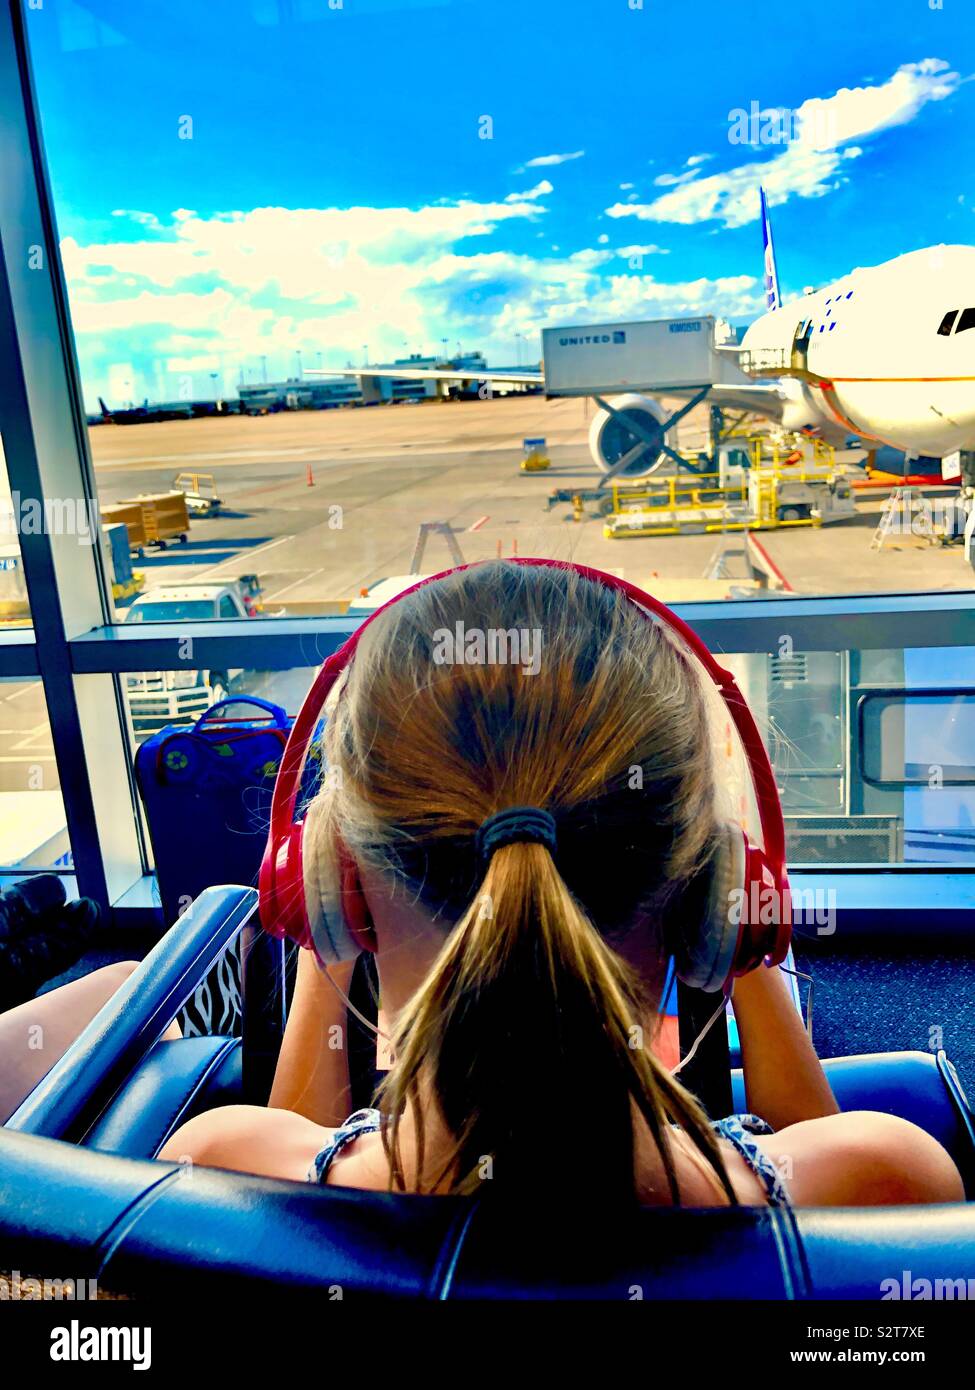 Teen girl at airport gate wearing headphones Stock Photo